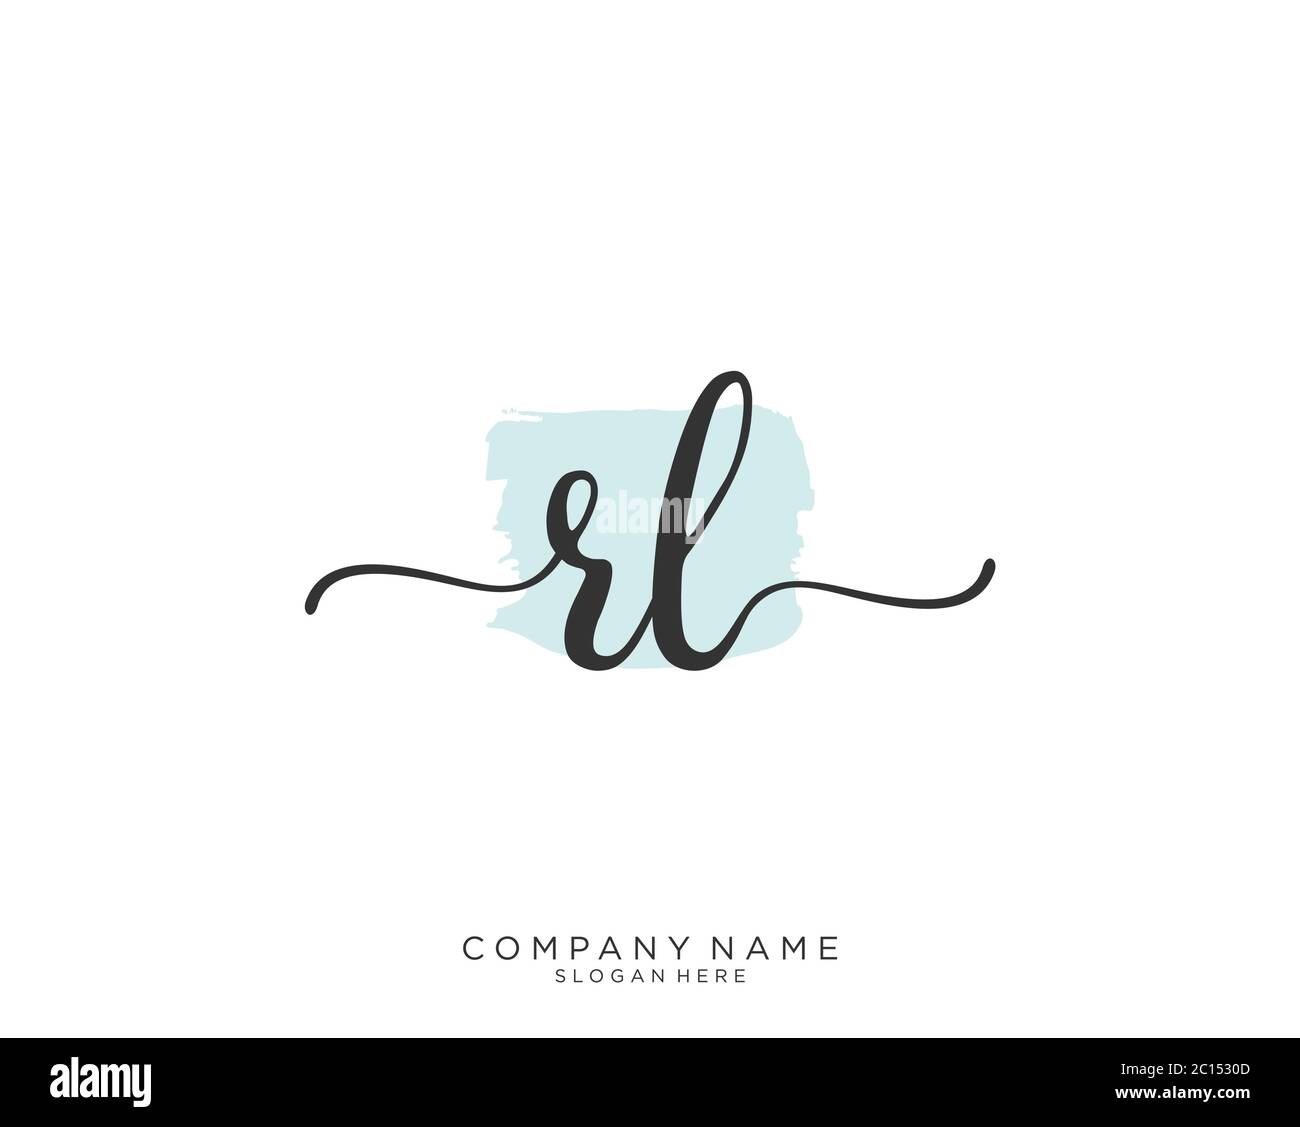 RL Initial handwriting logo vector Stock Vector